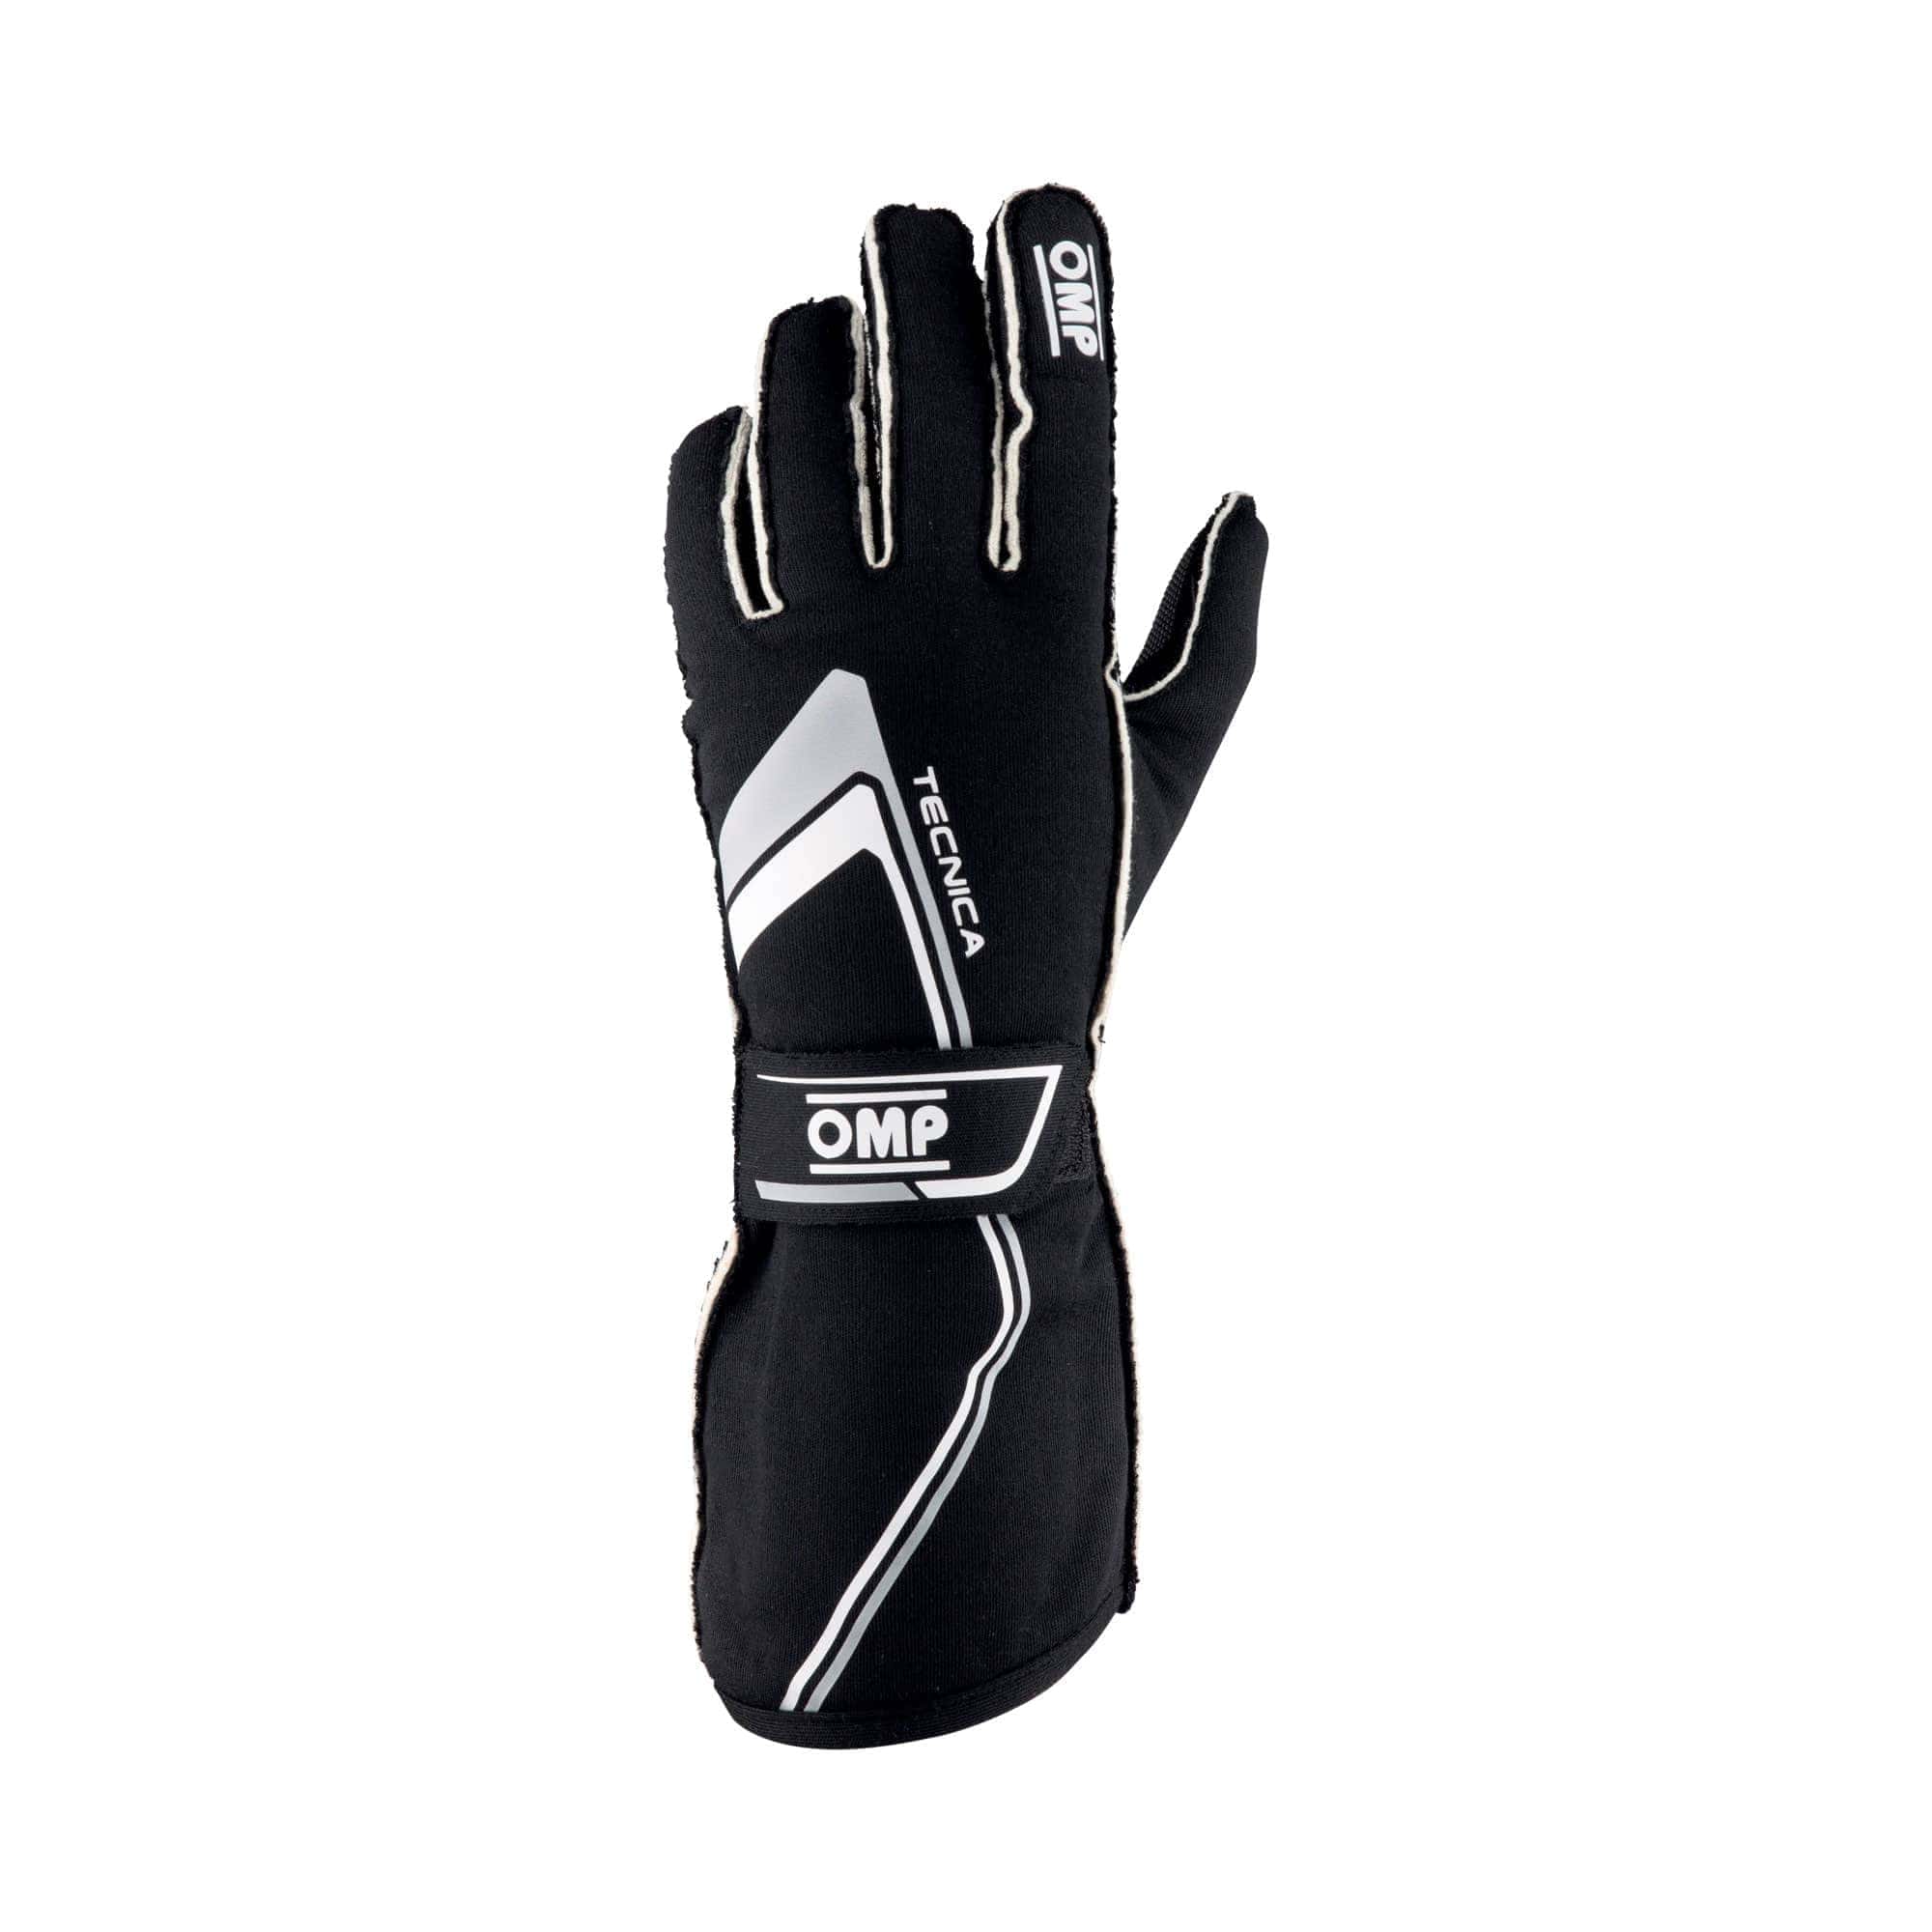 Guanti-Tecnica-Gloves-Omp-Nero-Bianco-IB-772-NW